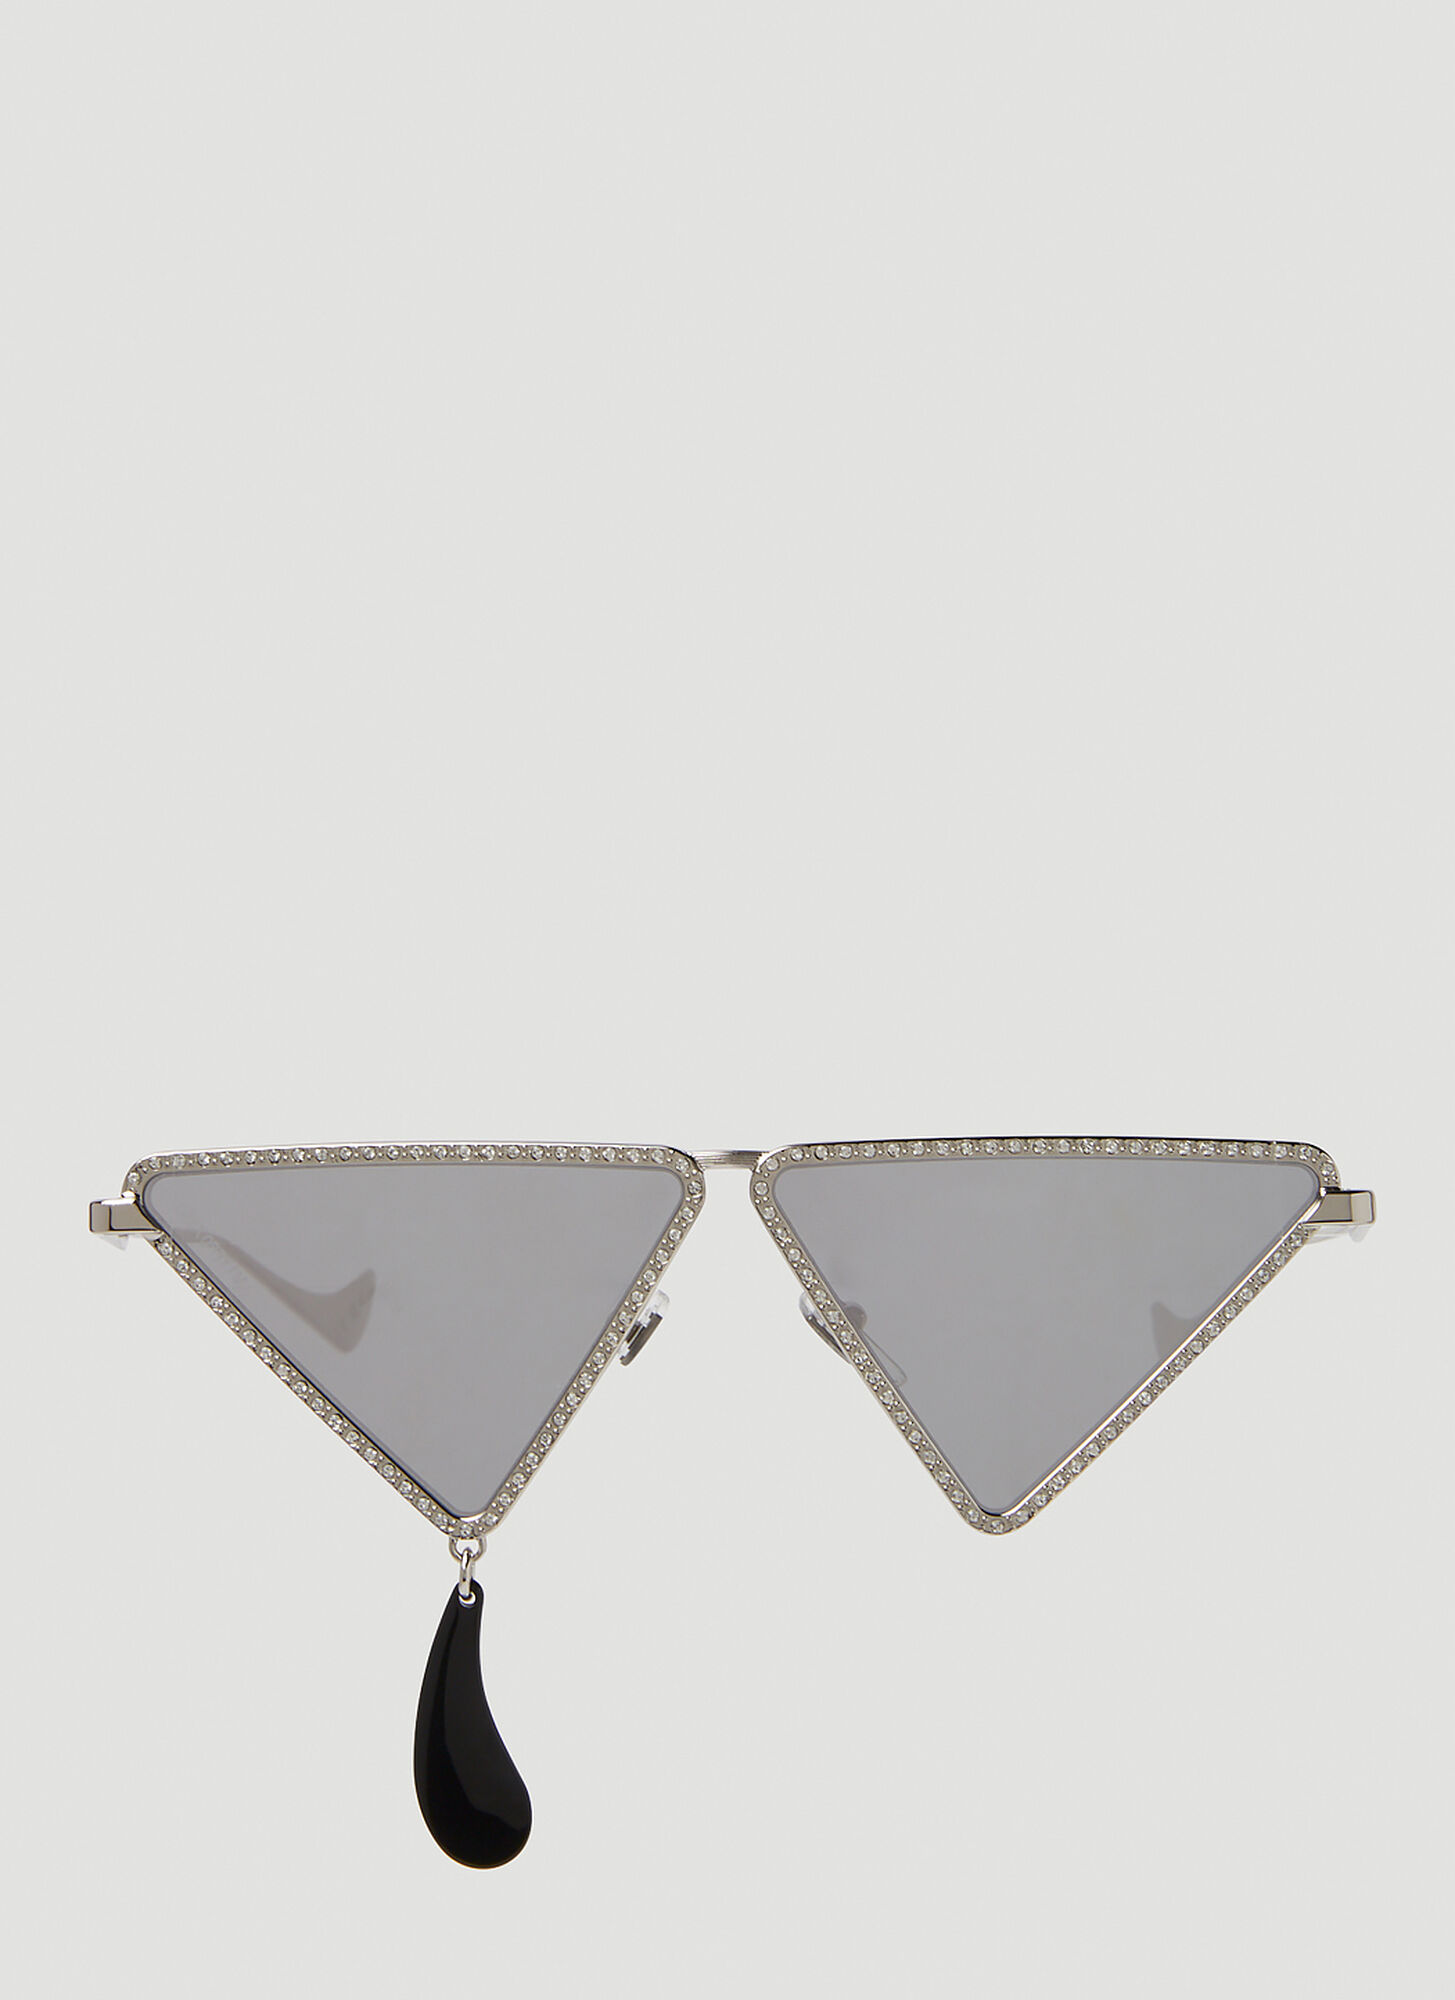 Gucci Studded Geometric Sunglasses In Silver